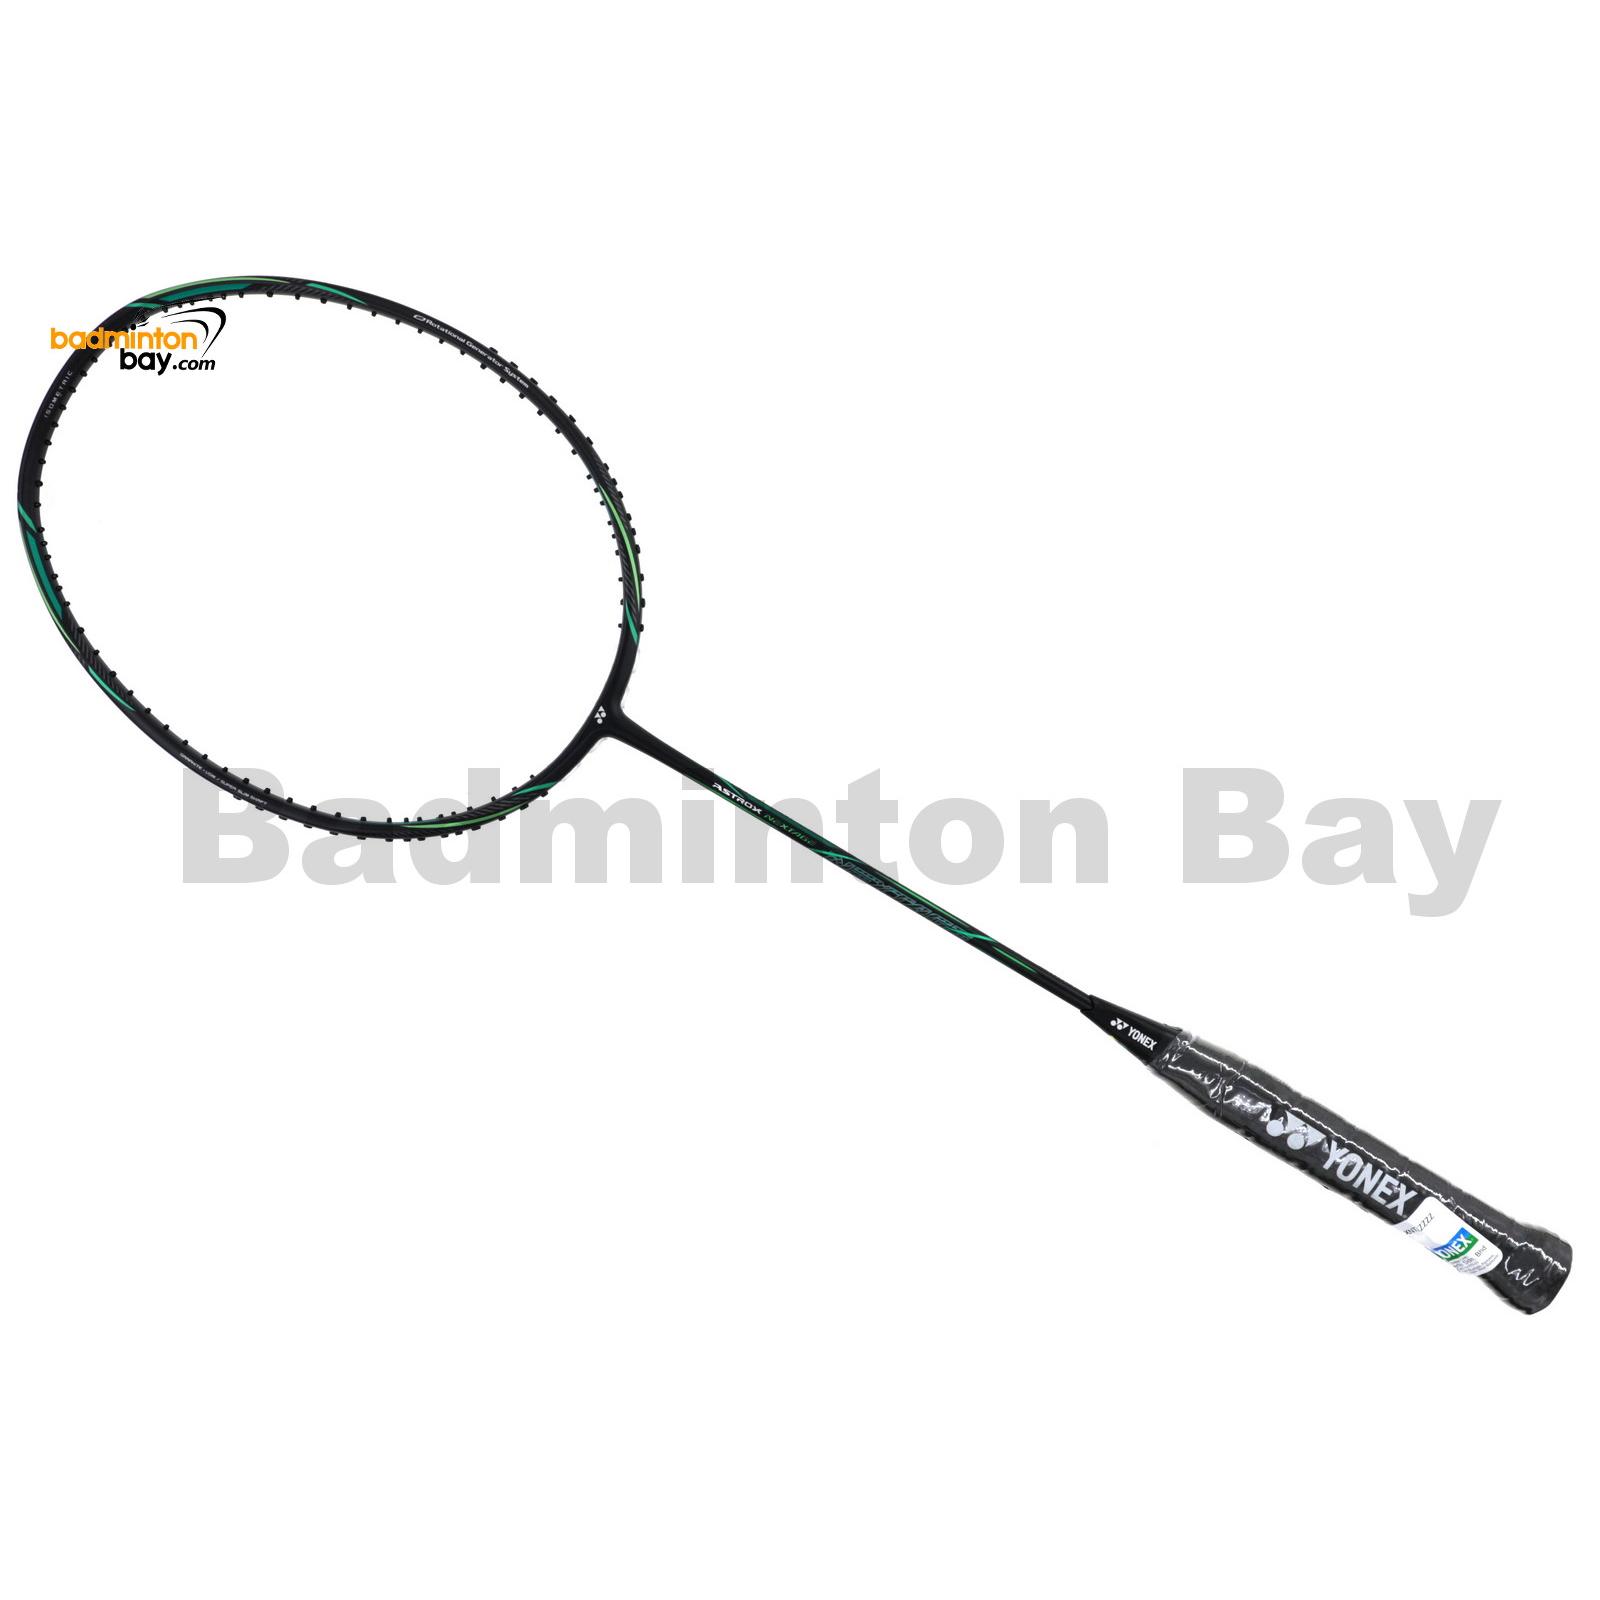 Yonex Astrox Nextage Black Green ( Made In Taiwan ) Badminton Racket (4U-G5)